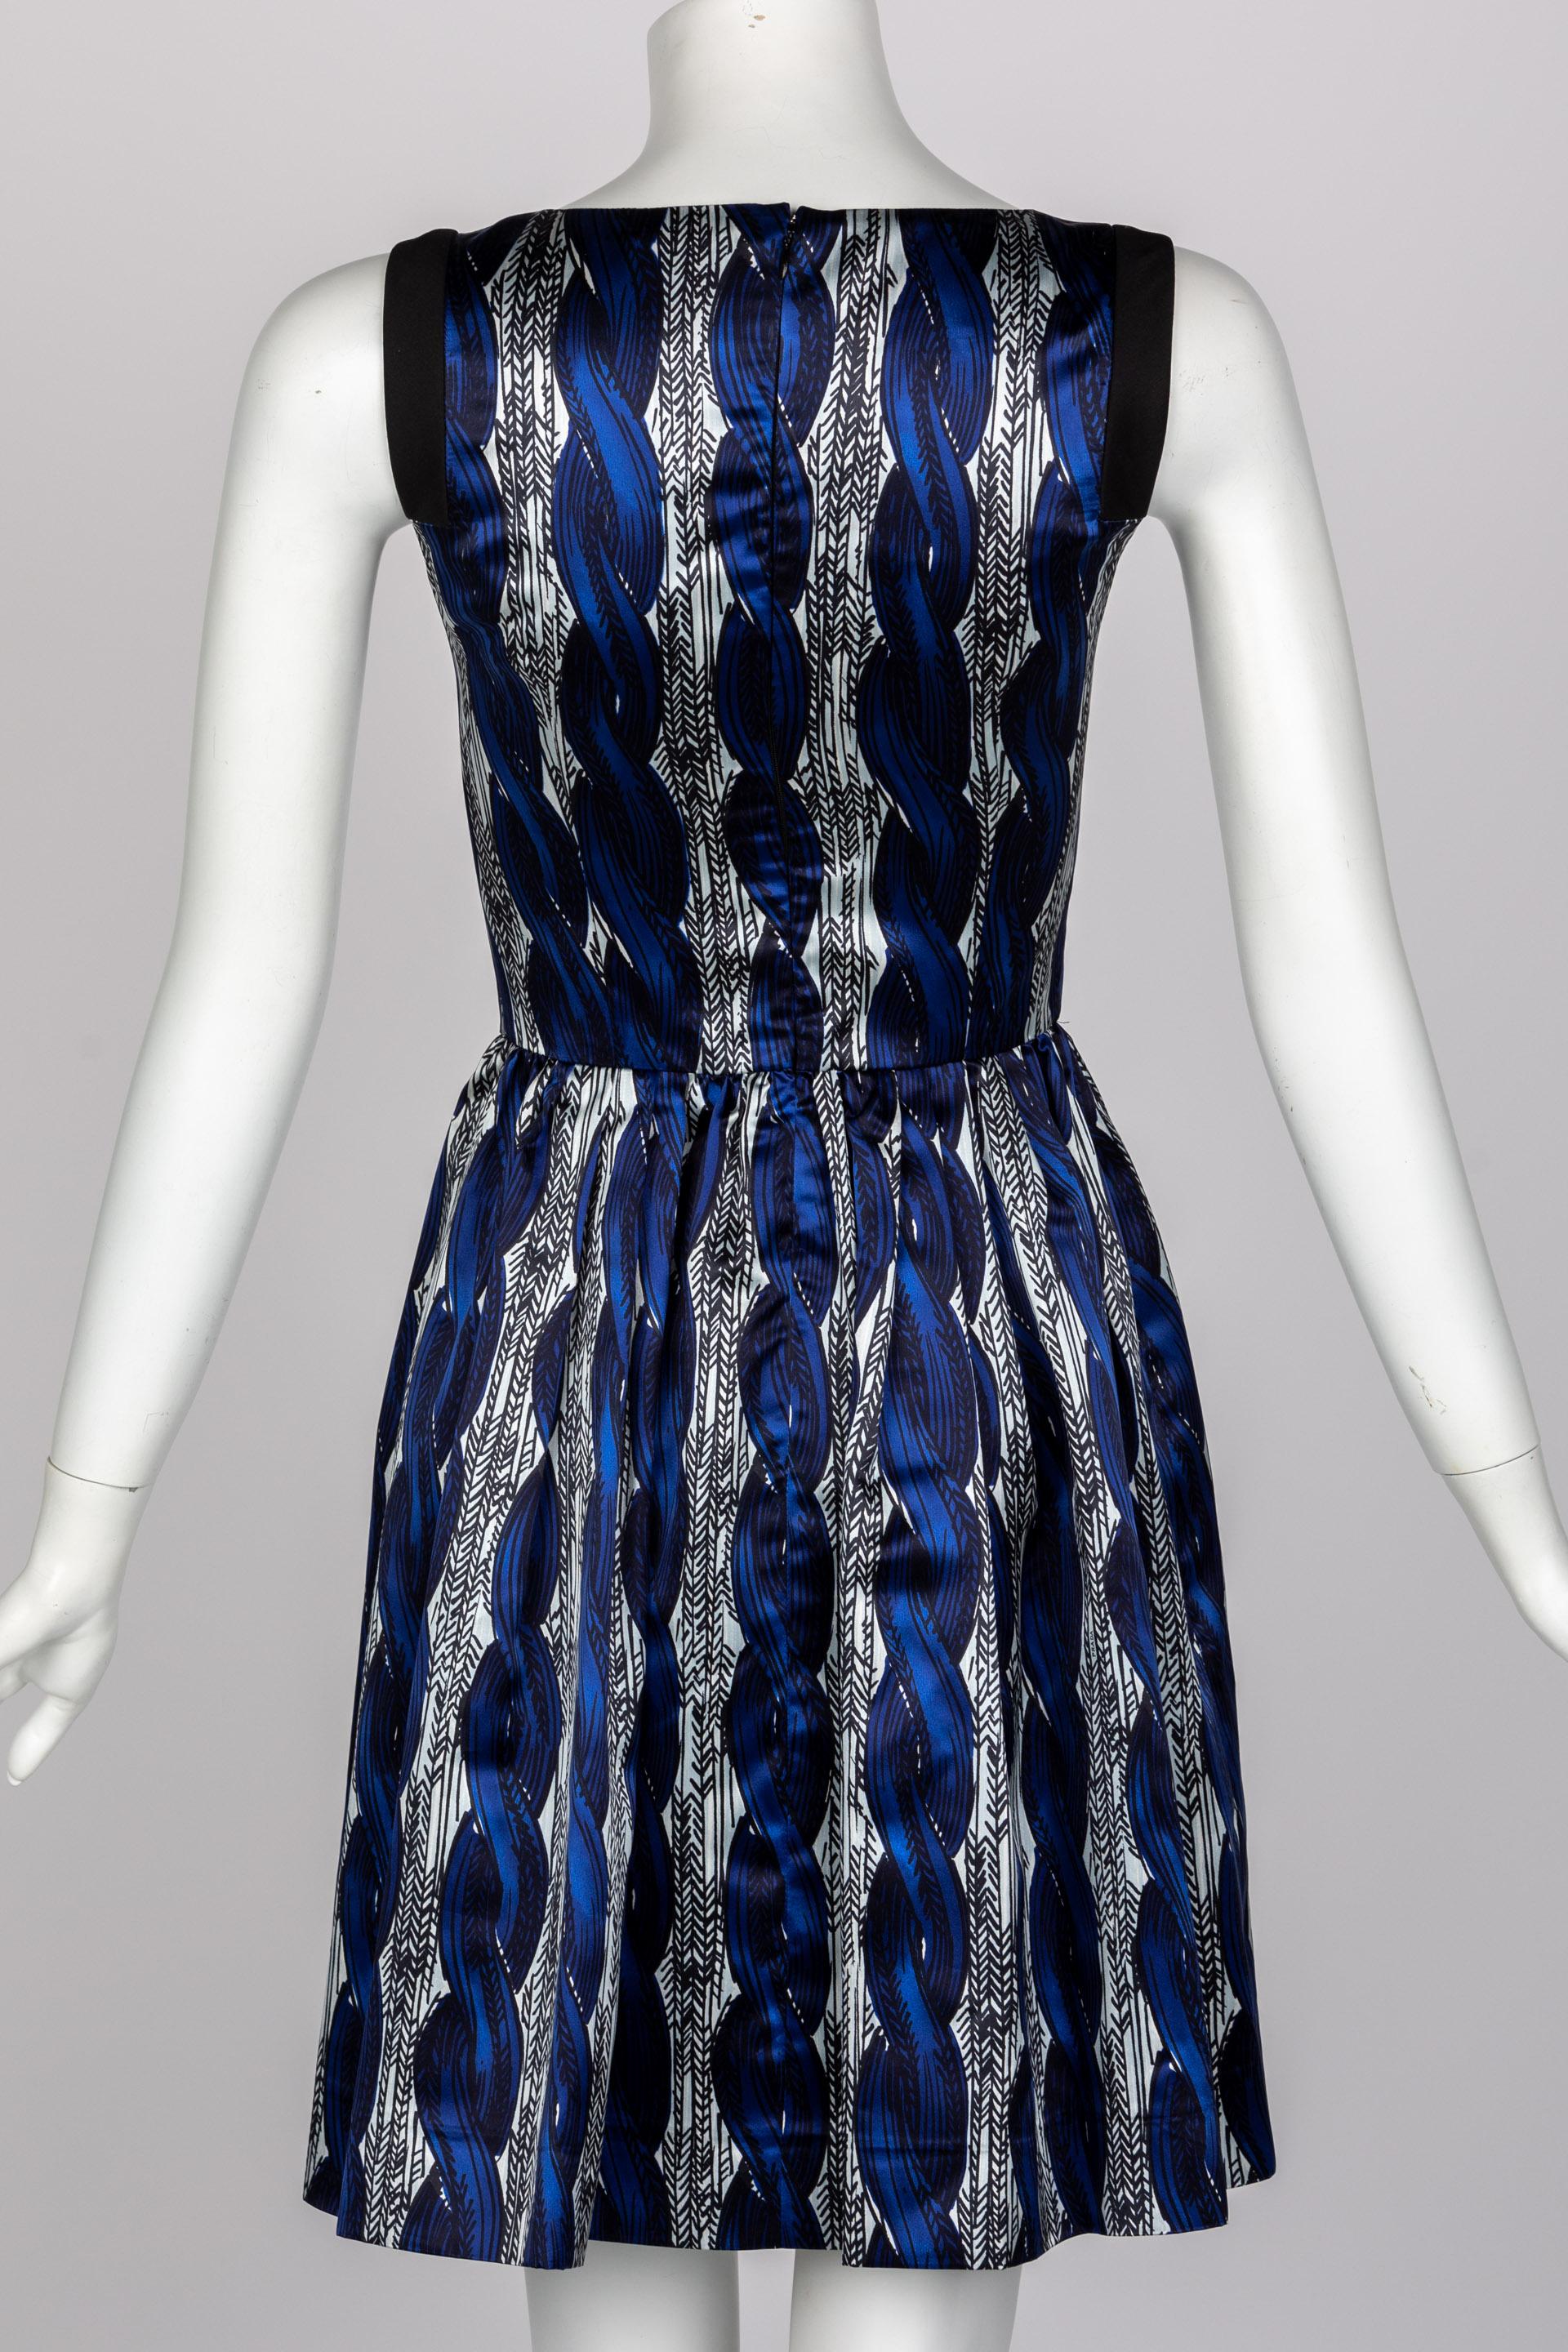 Prada Silk Cable Knit Blue Black Printed Cut Out Dress Runway Fall 2010 1